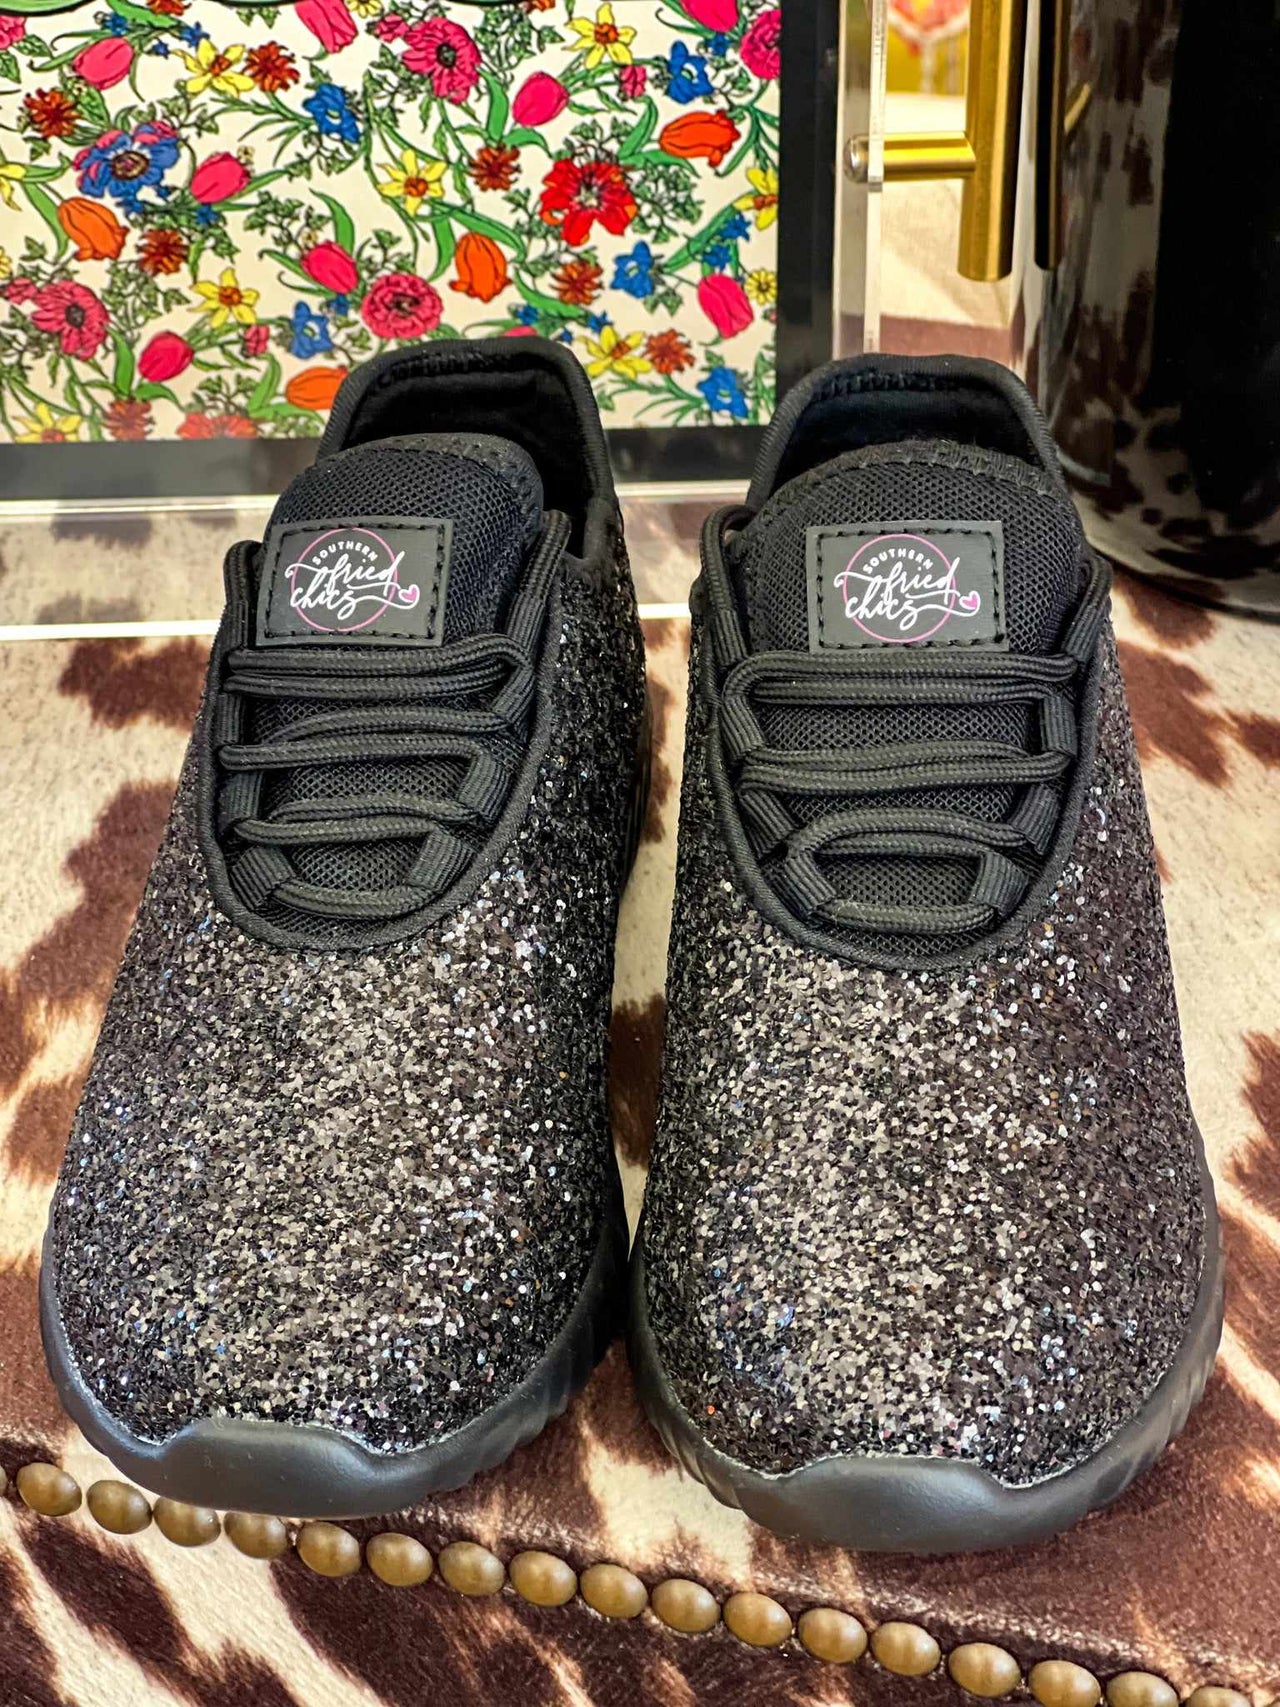 Shimmery Glitter Tennis Shoes in Bulk 